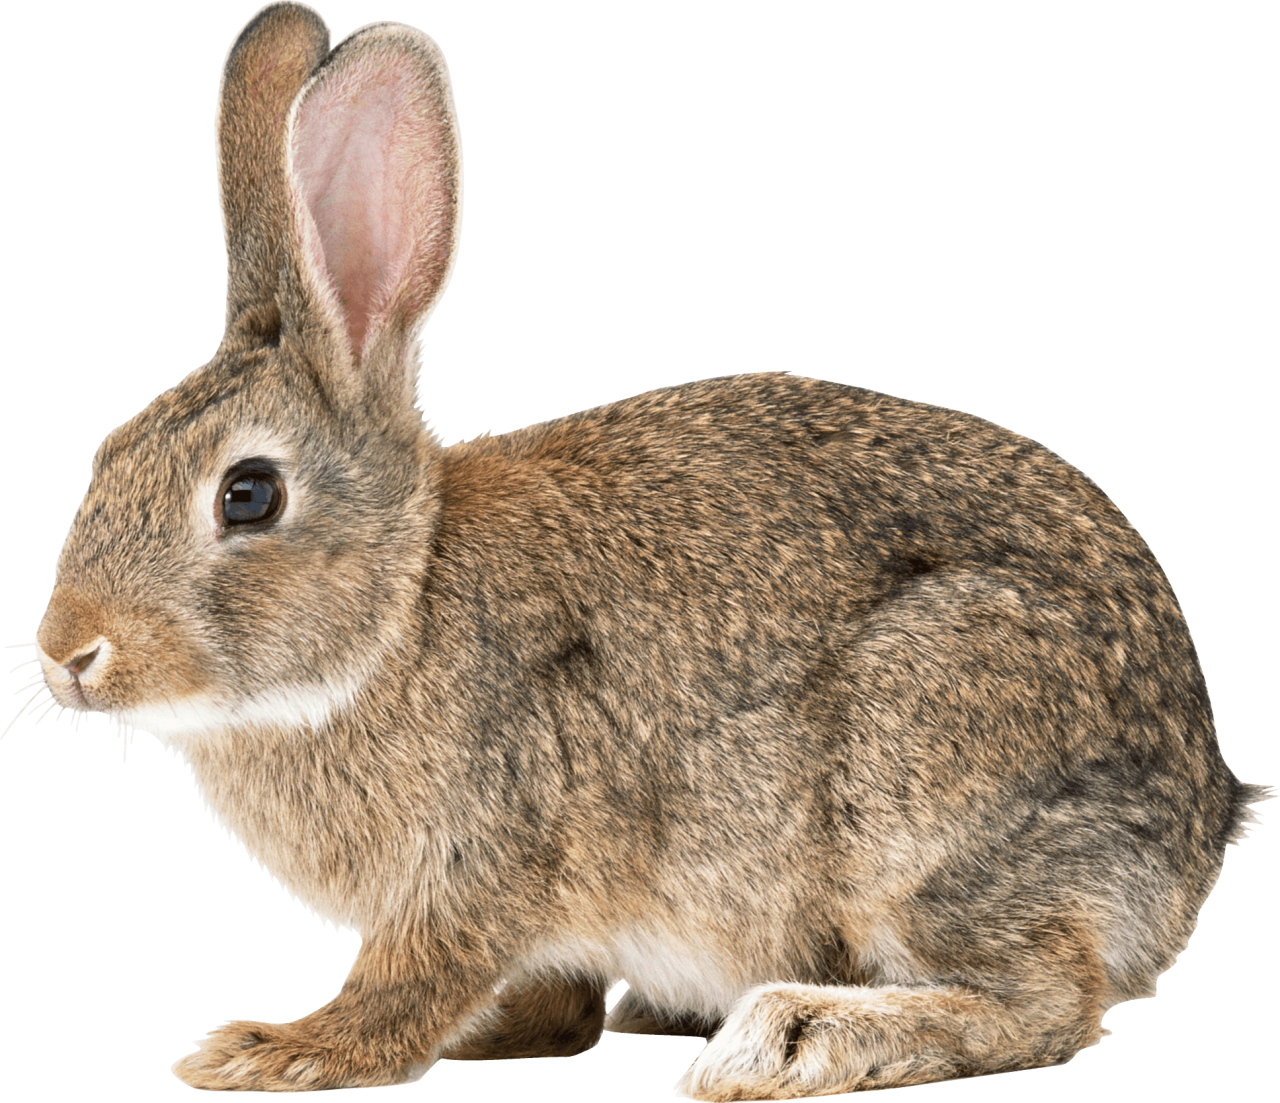 brown rabbit PNG Image - PurePNG | Free transparent CC0 PNG Image Library